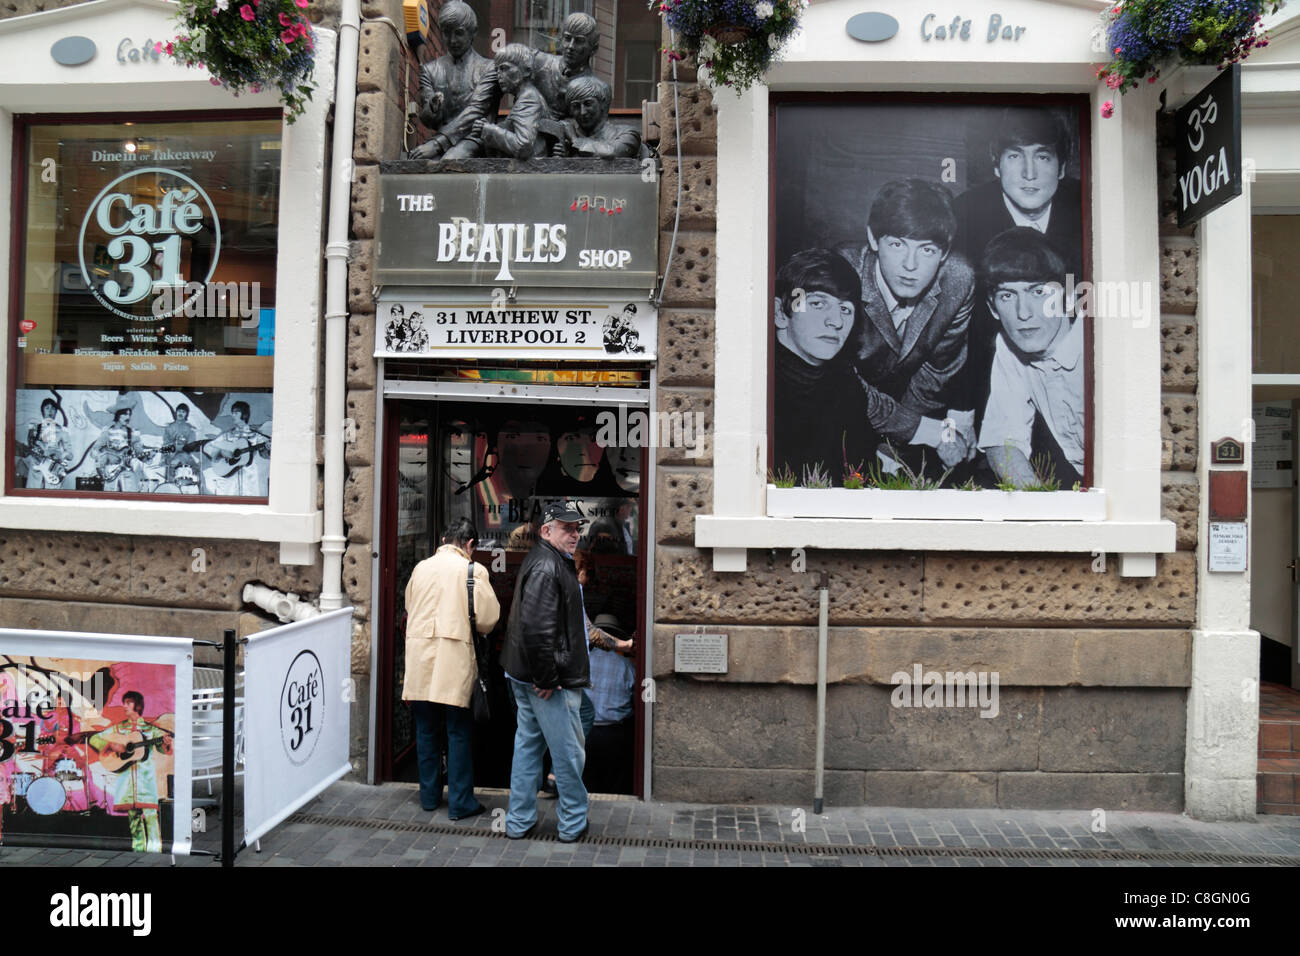 The Beatles Shop at 31 Mathew Street, Liverpool, England. Stock Photo